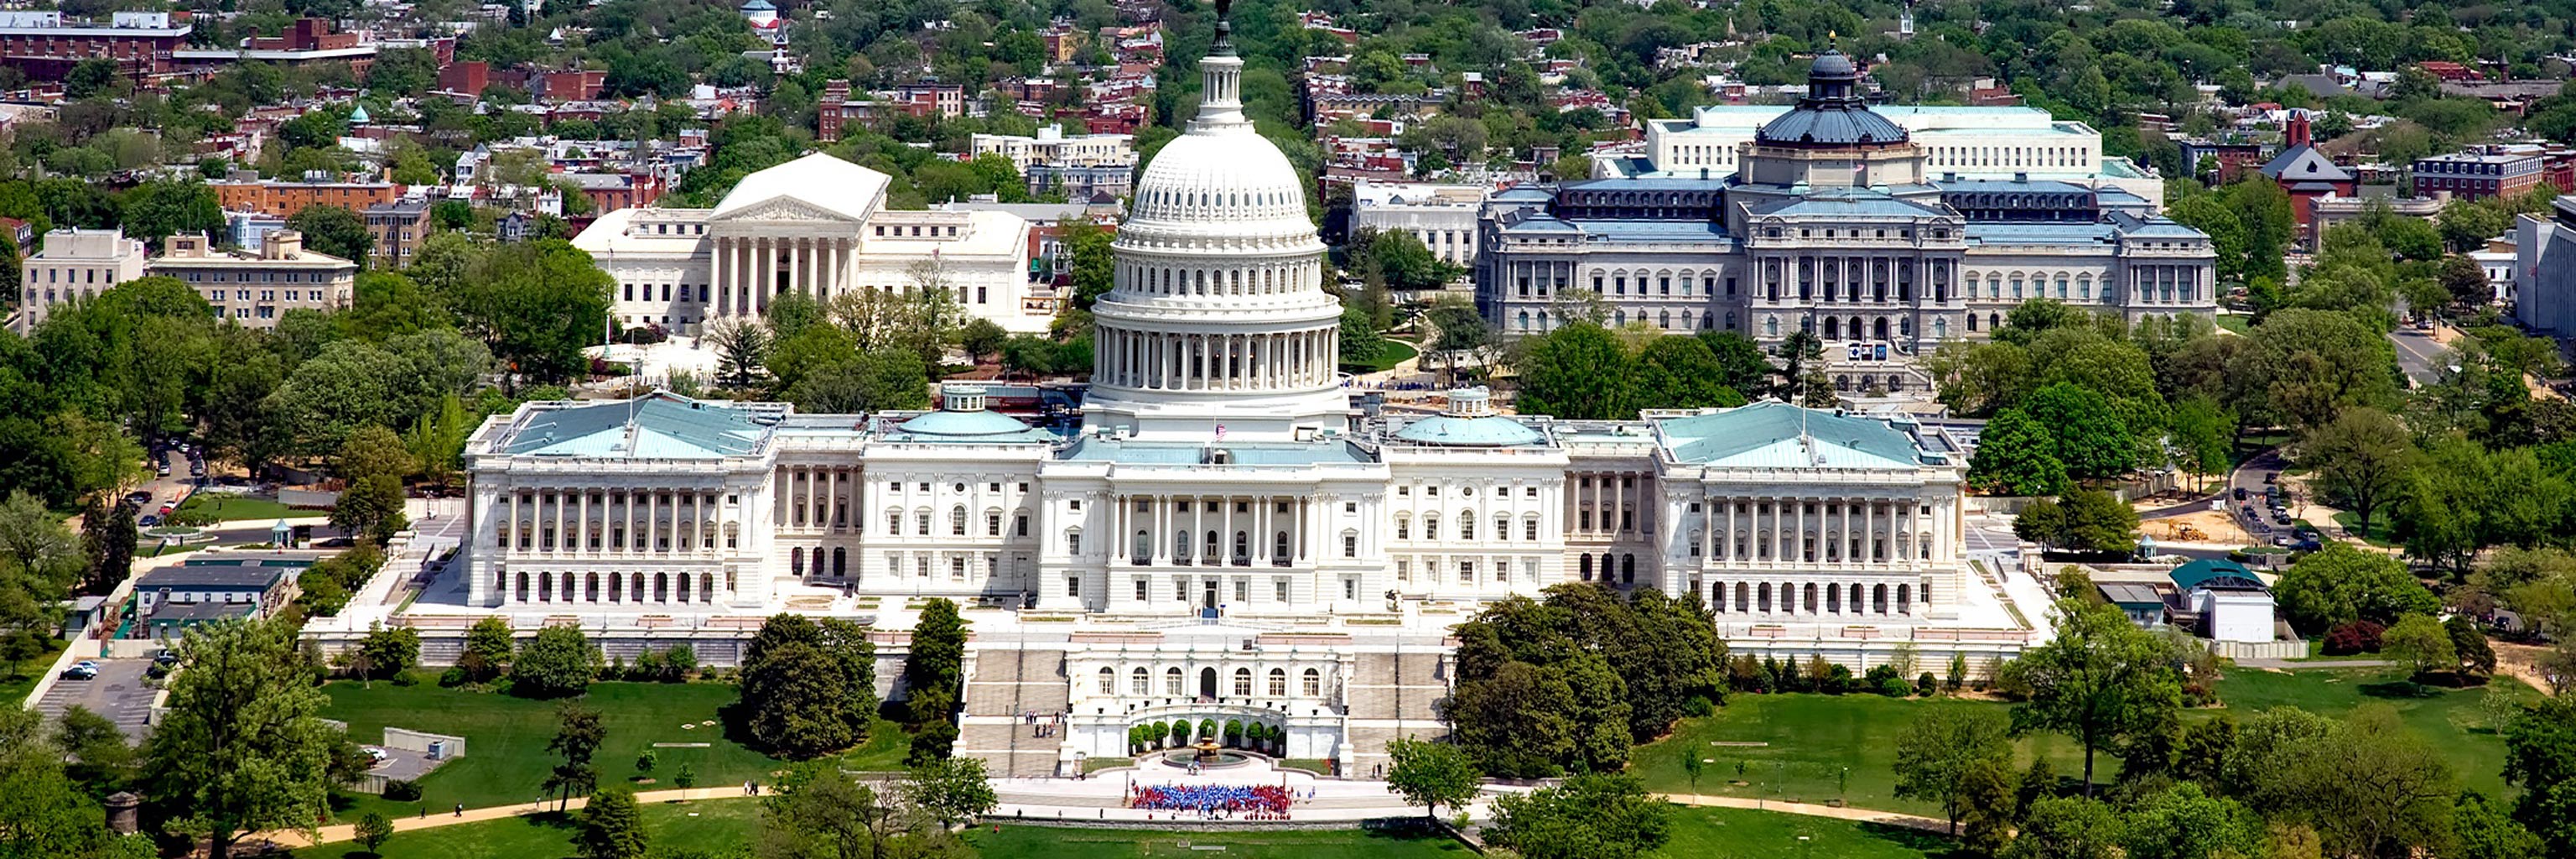 A far, bird's eye shot of the Capitol Building in Washington, D.C.